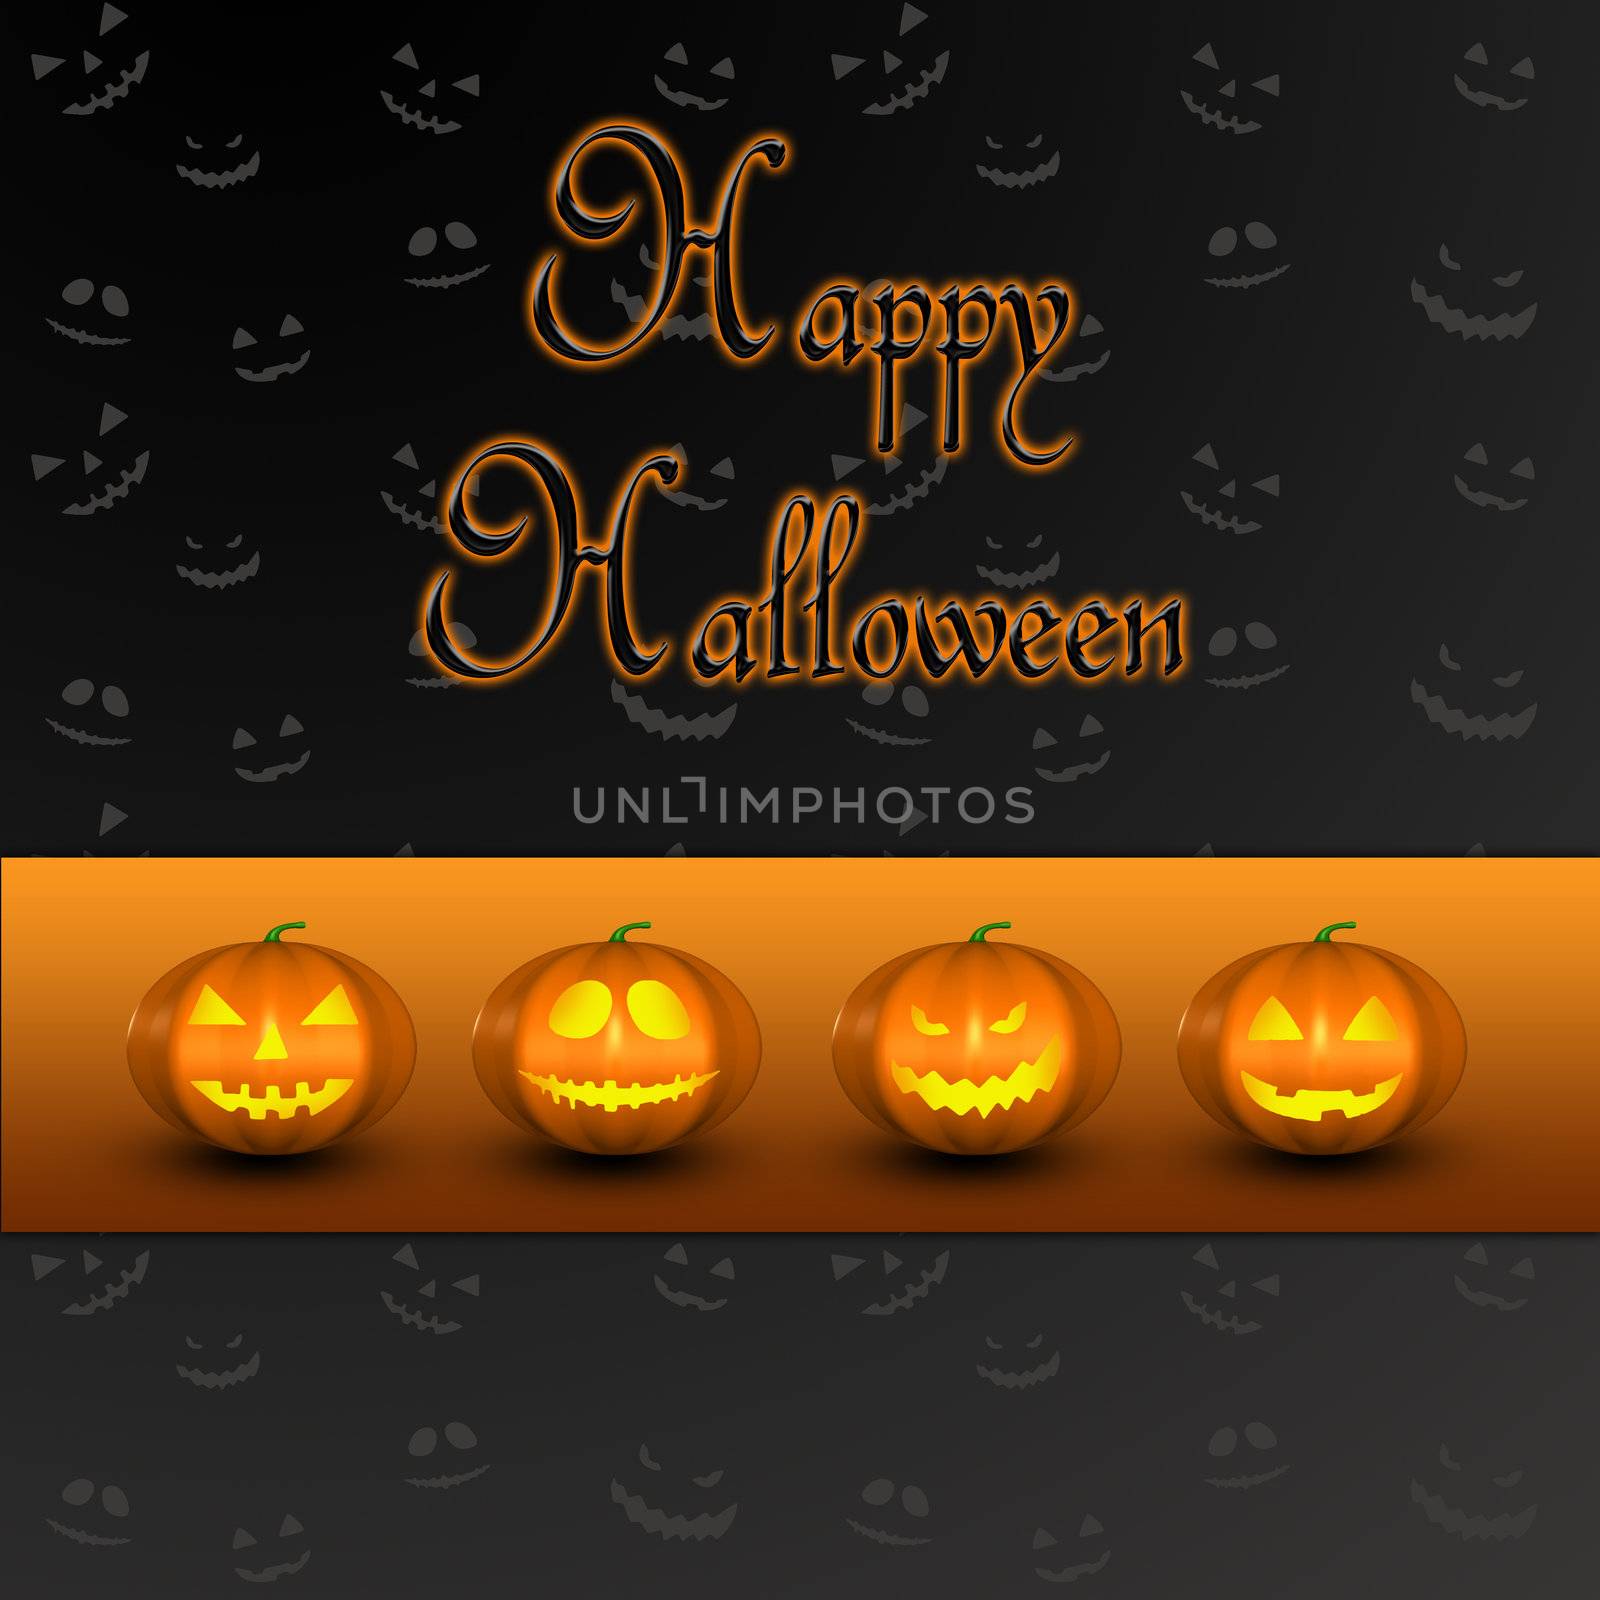 Halloween Pumpkins Jack-o-Lantern by SorayaShan